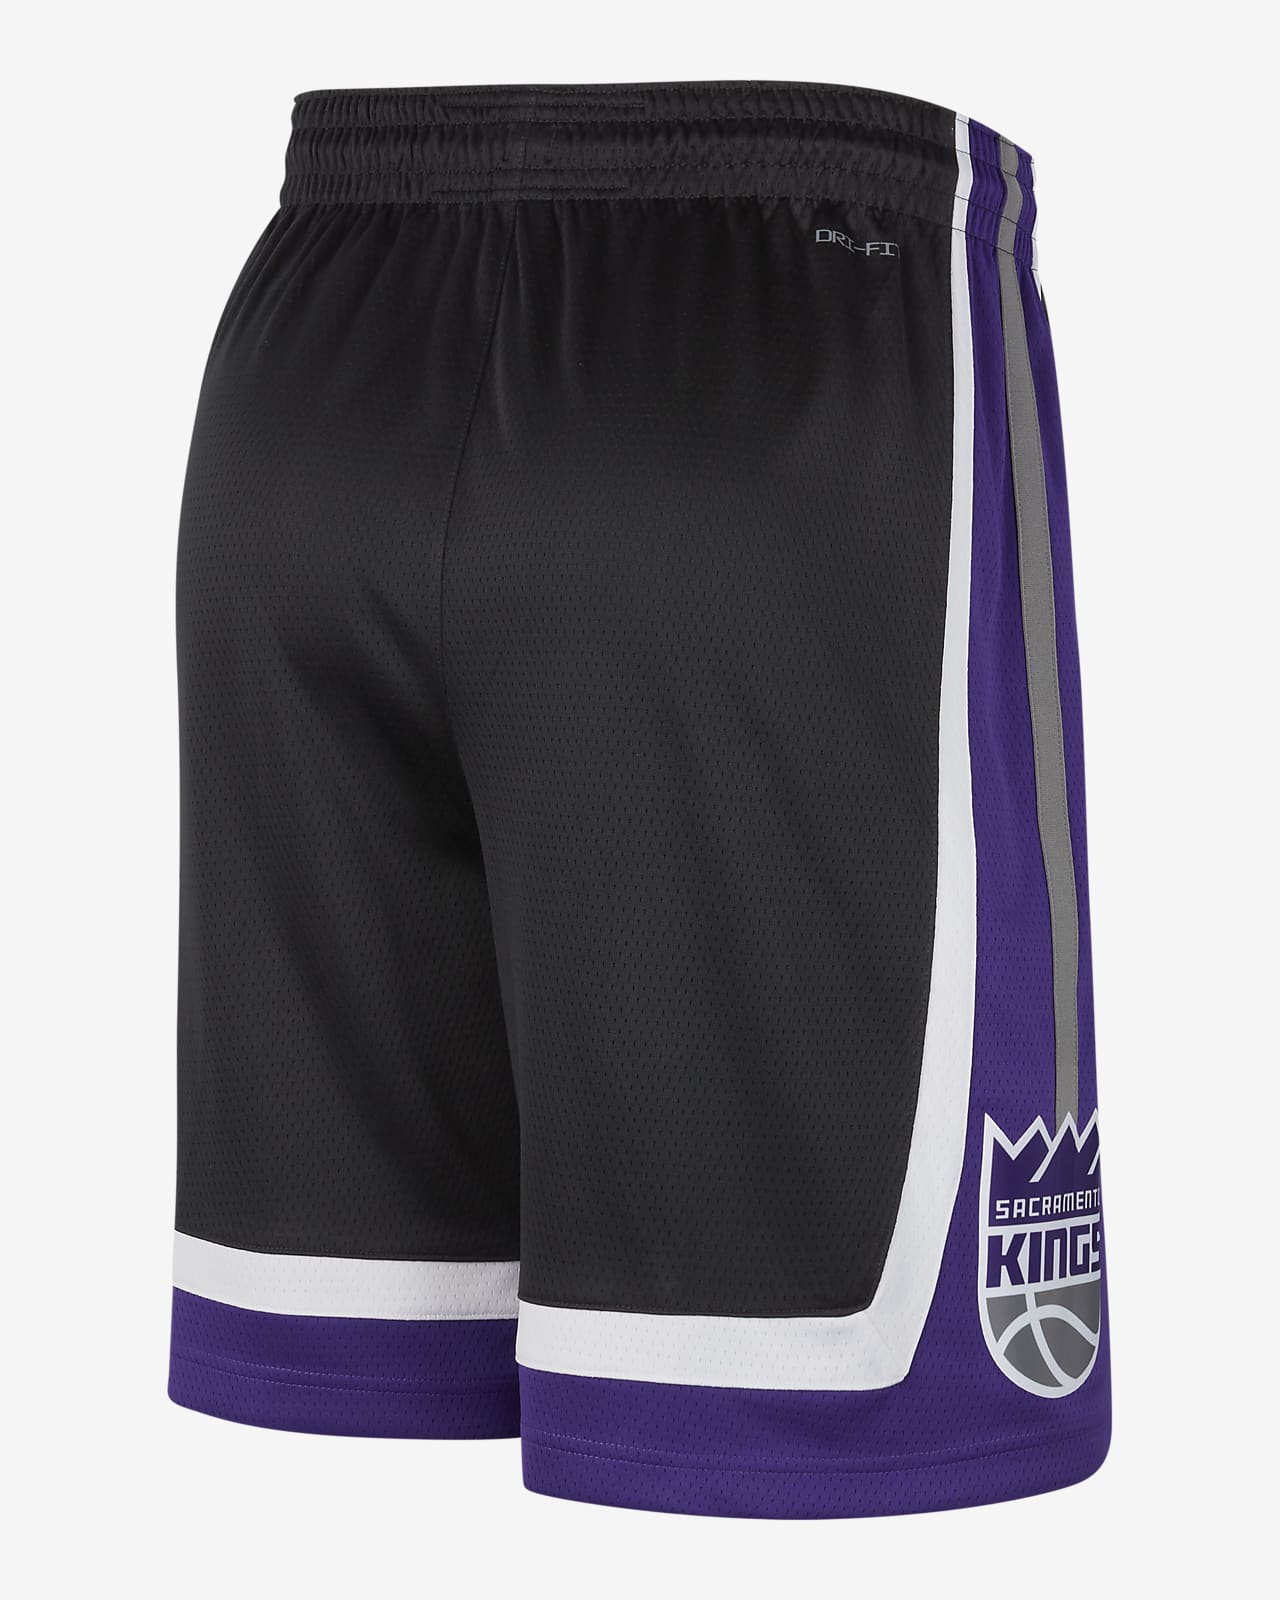 Warriors Standard Issue Men's Nike NBA Reversible Shorts